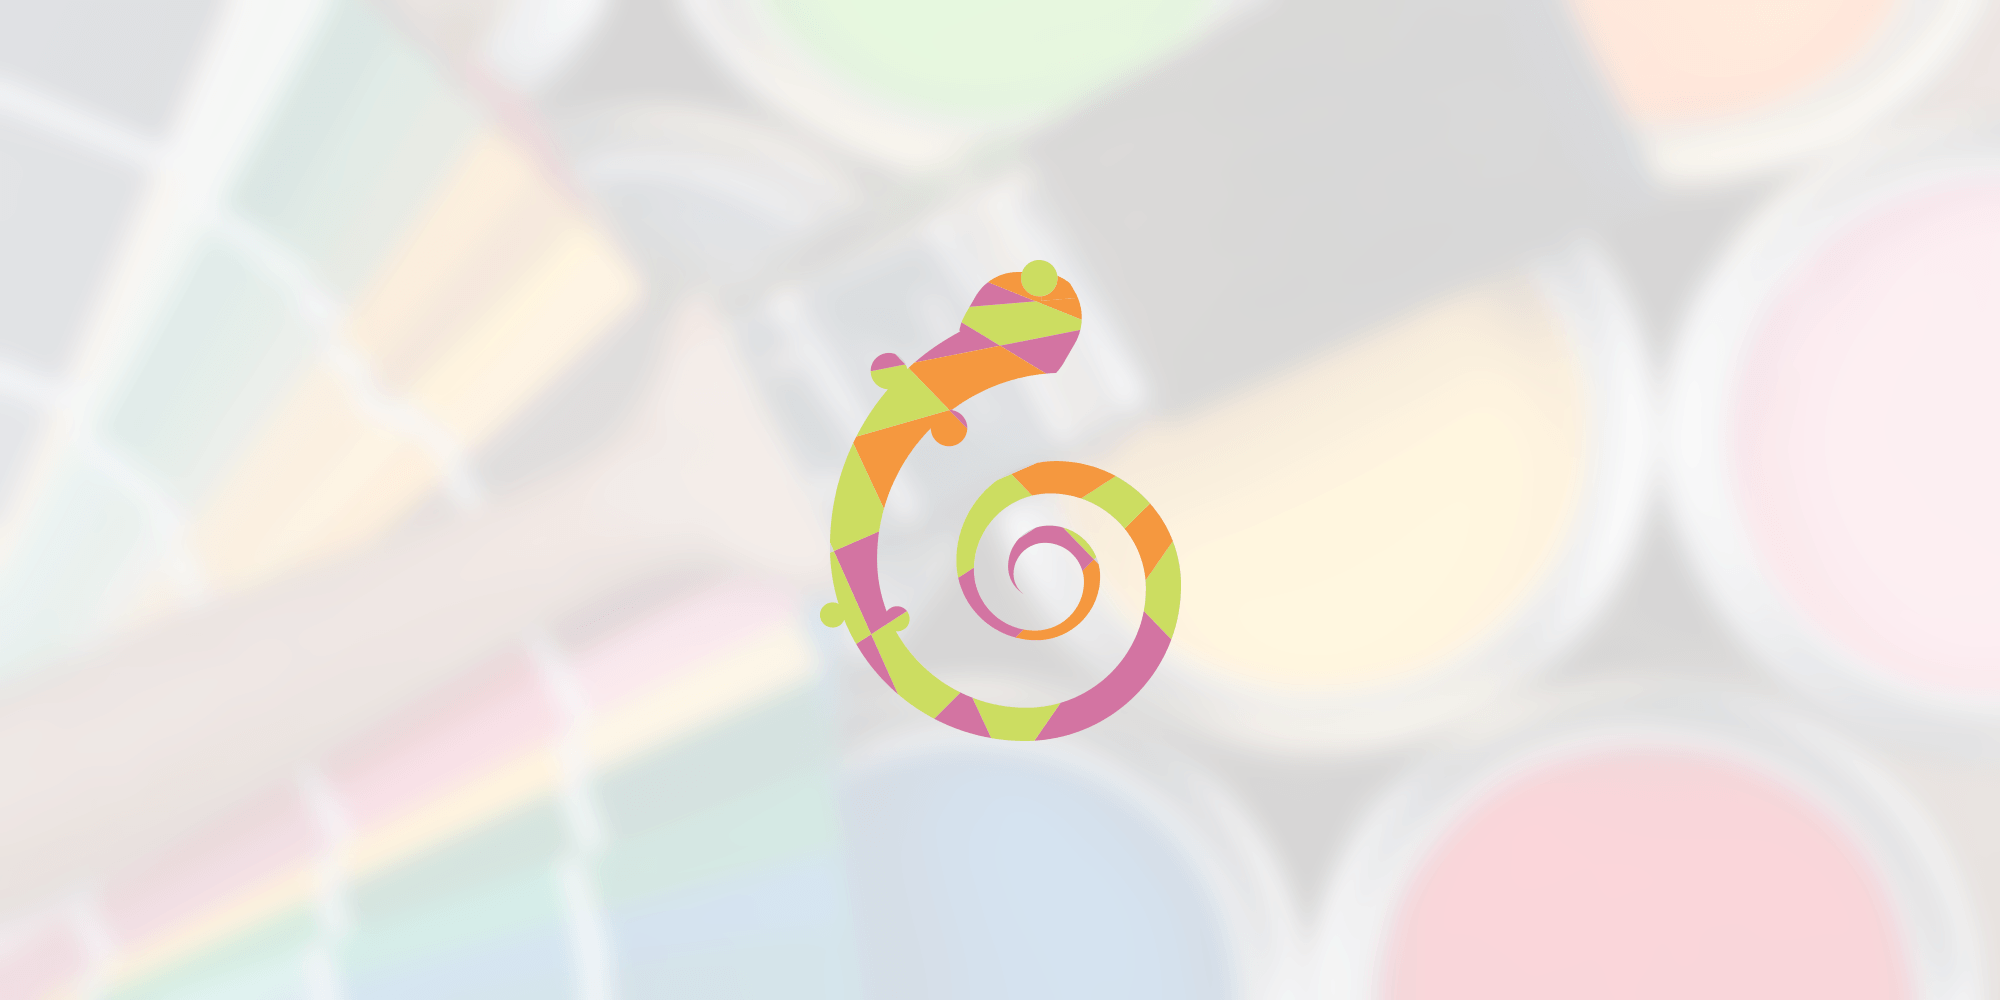 cdu logo with colorful bg